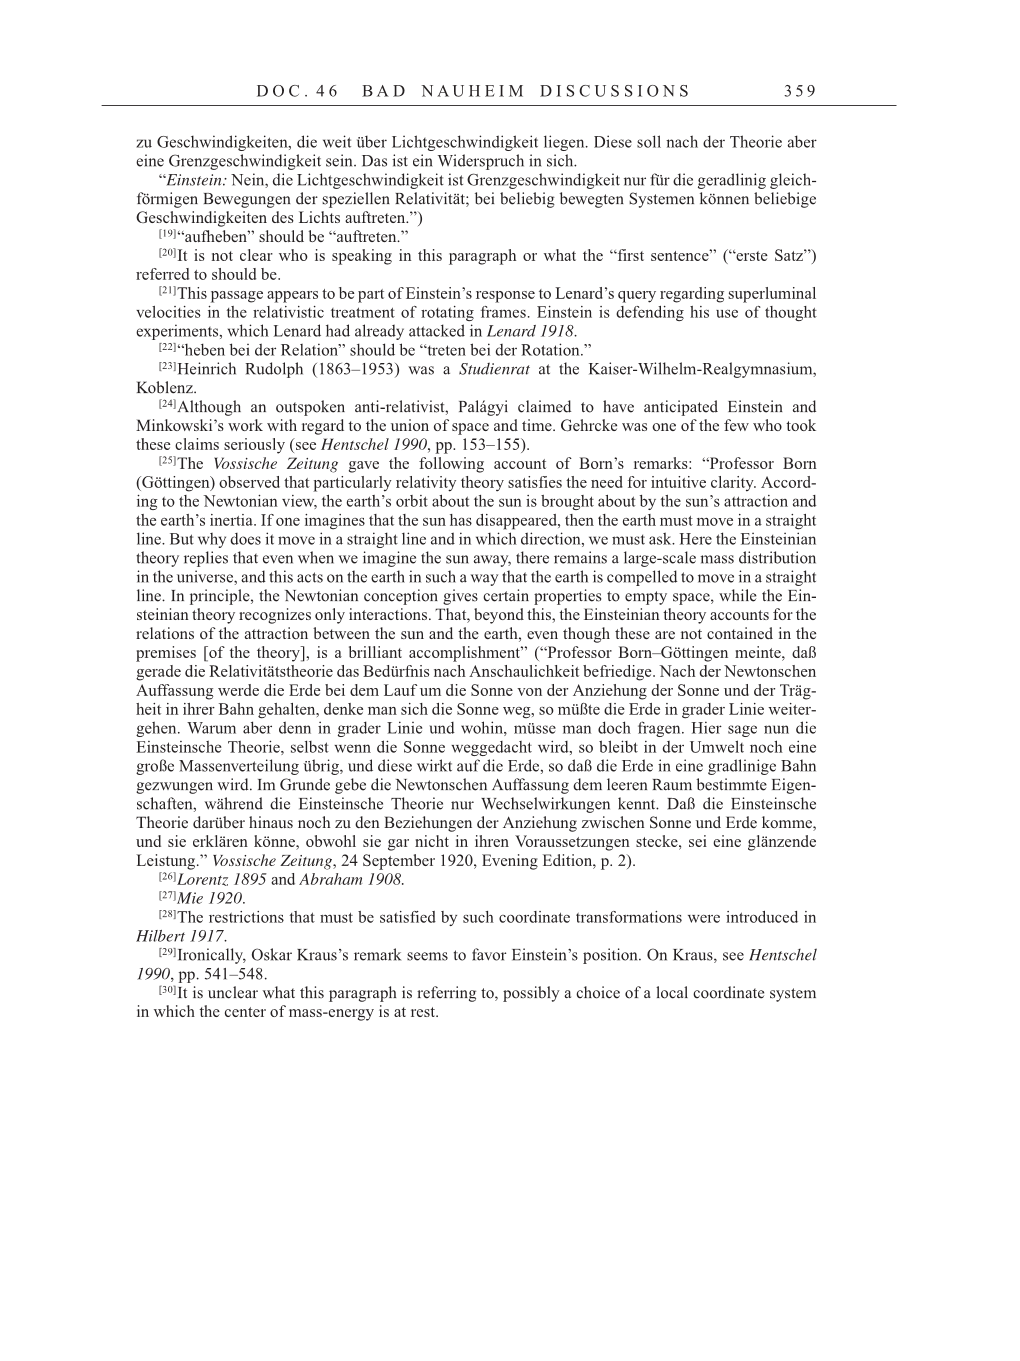 Volume 7: The Berlin Years: Writings, 1918-1921 page 359